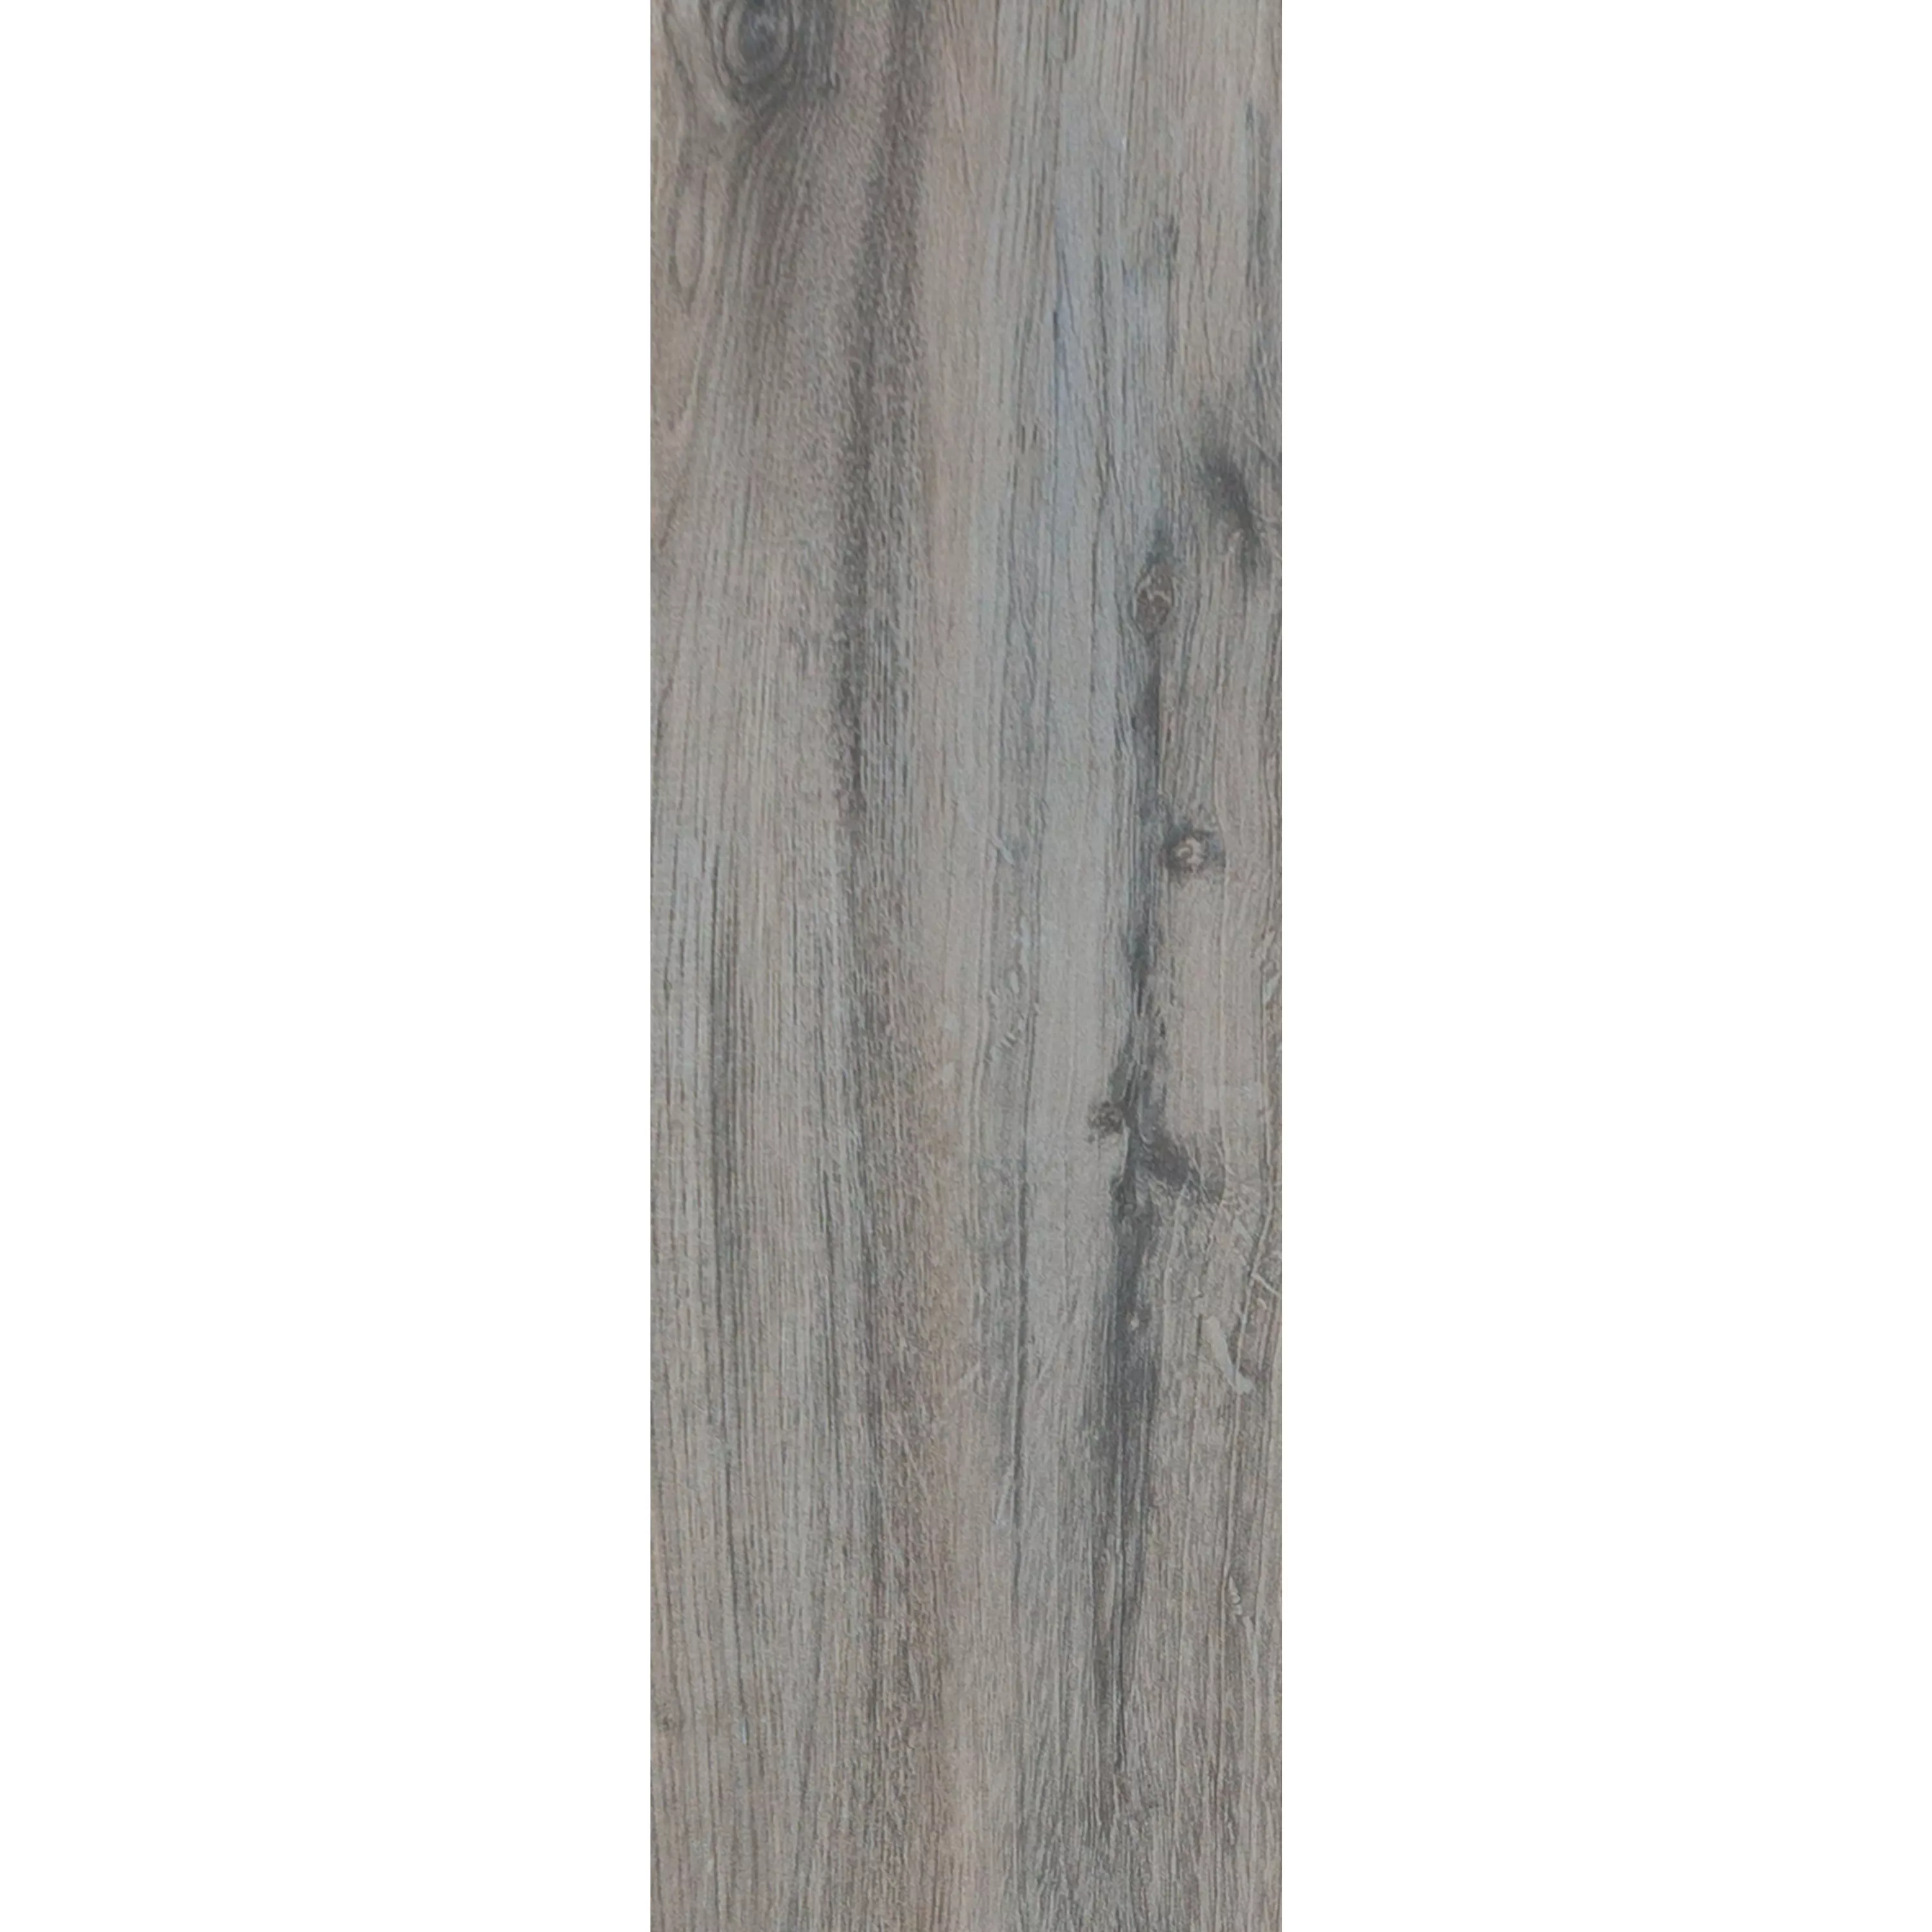 Sample Vloertegels Houtlook Fullwood Grijs 20x120cm